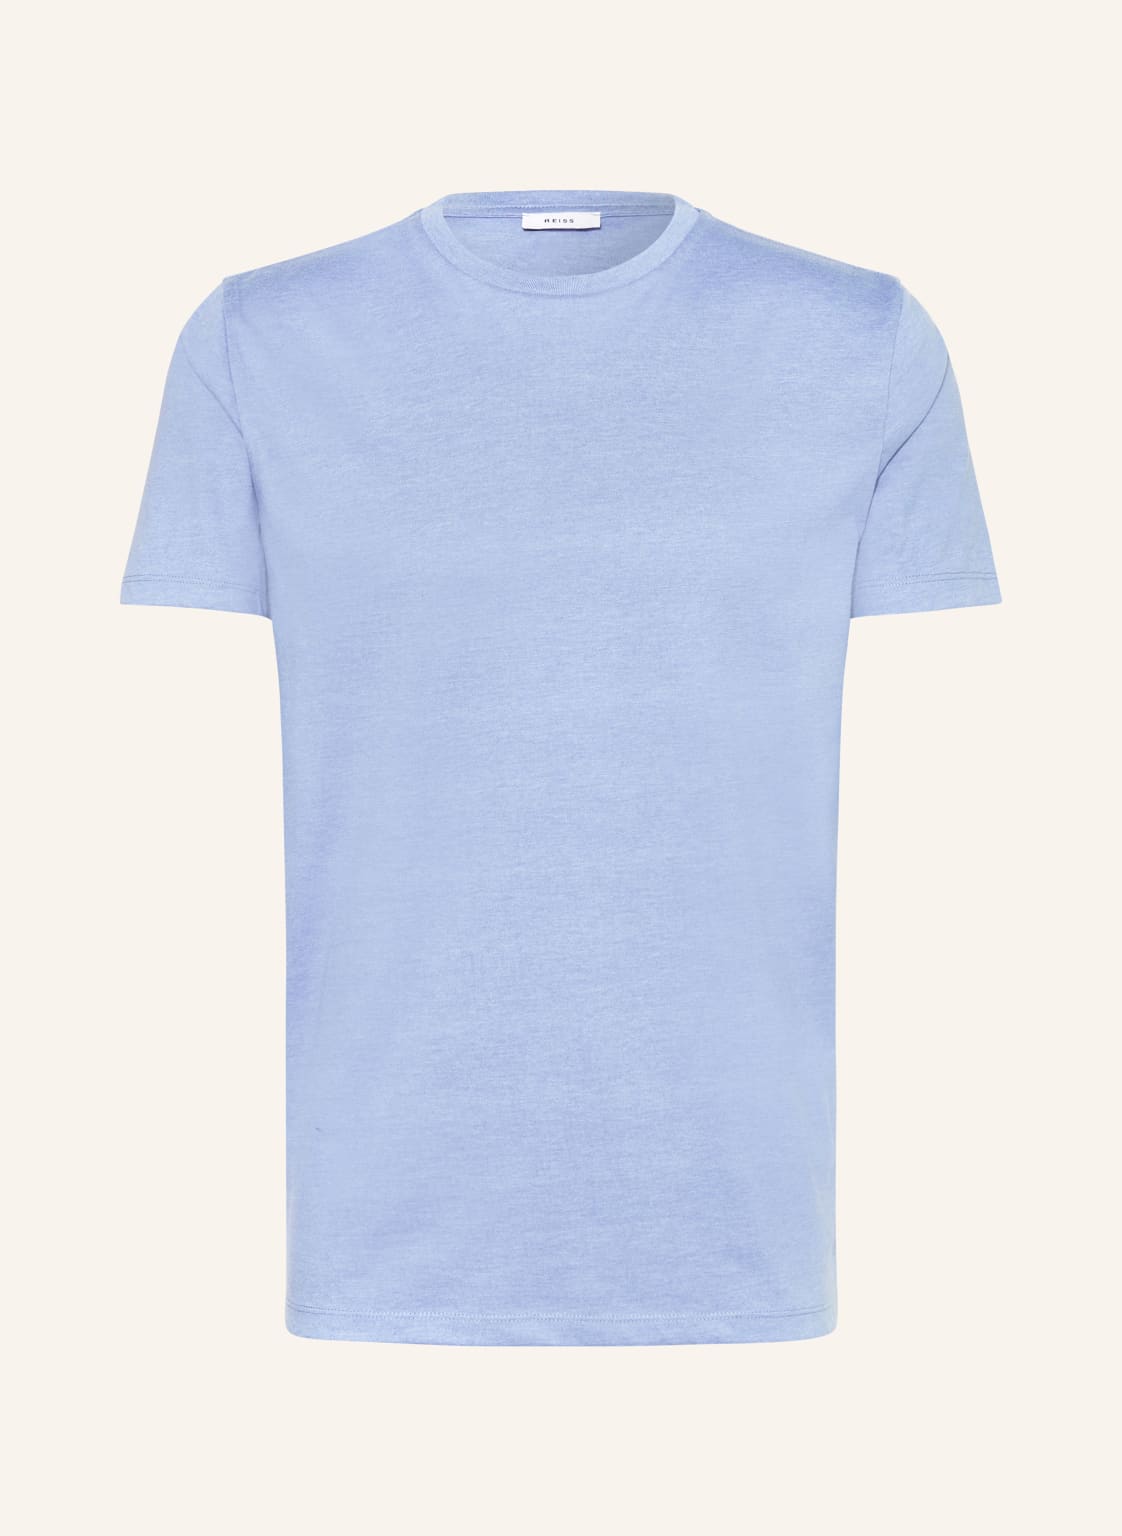 Reiss T-Shirt Bless blau von REISS